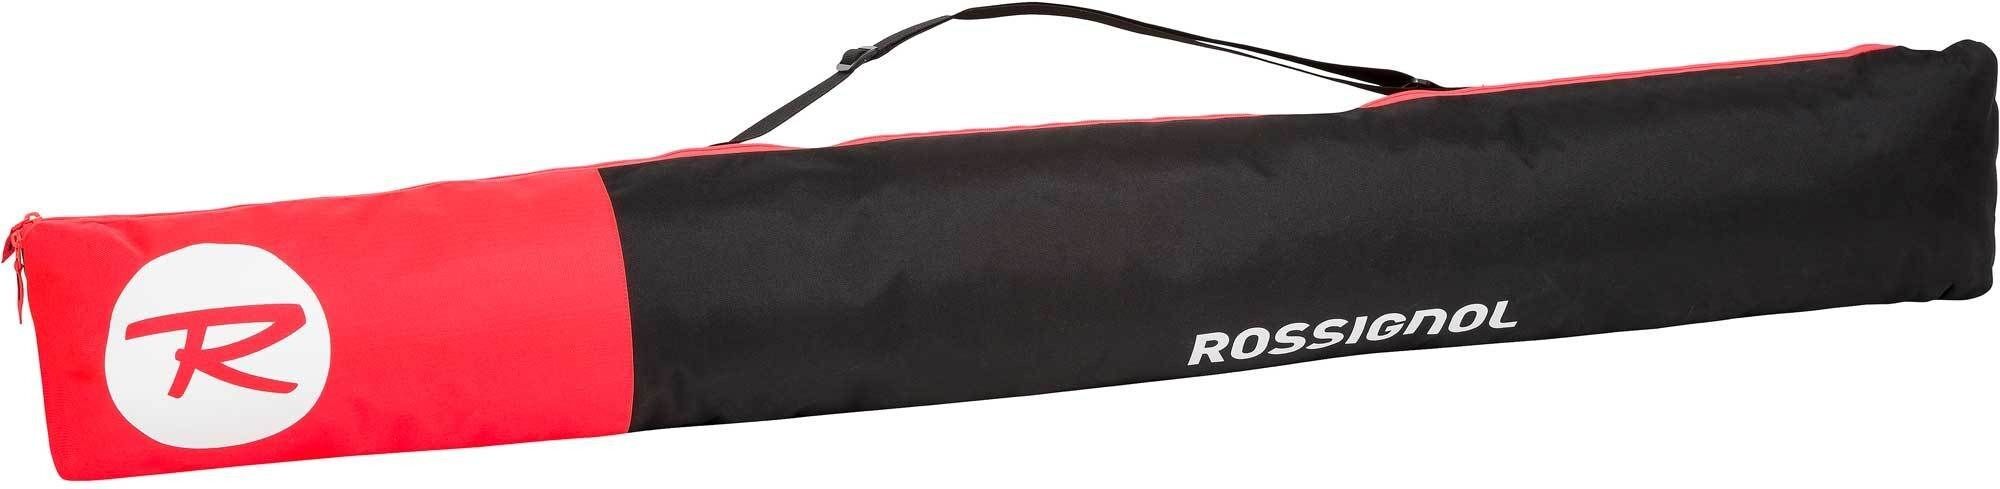 Rossignol Tactic Ski Bag extendable - Borsa portasci